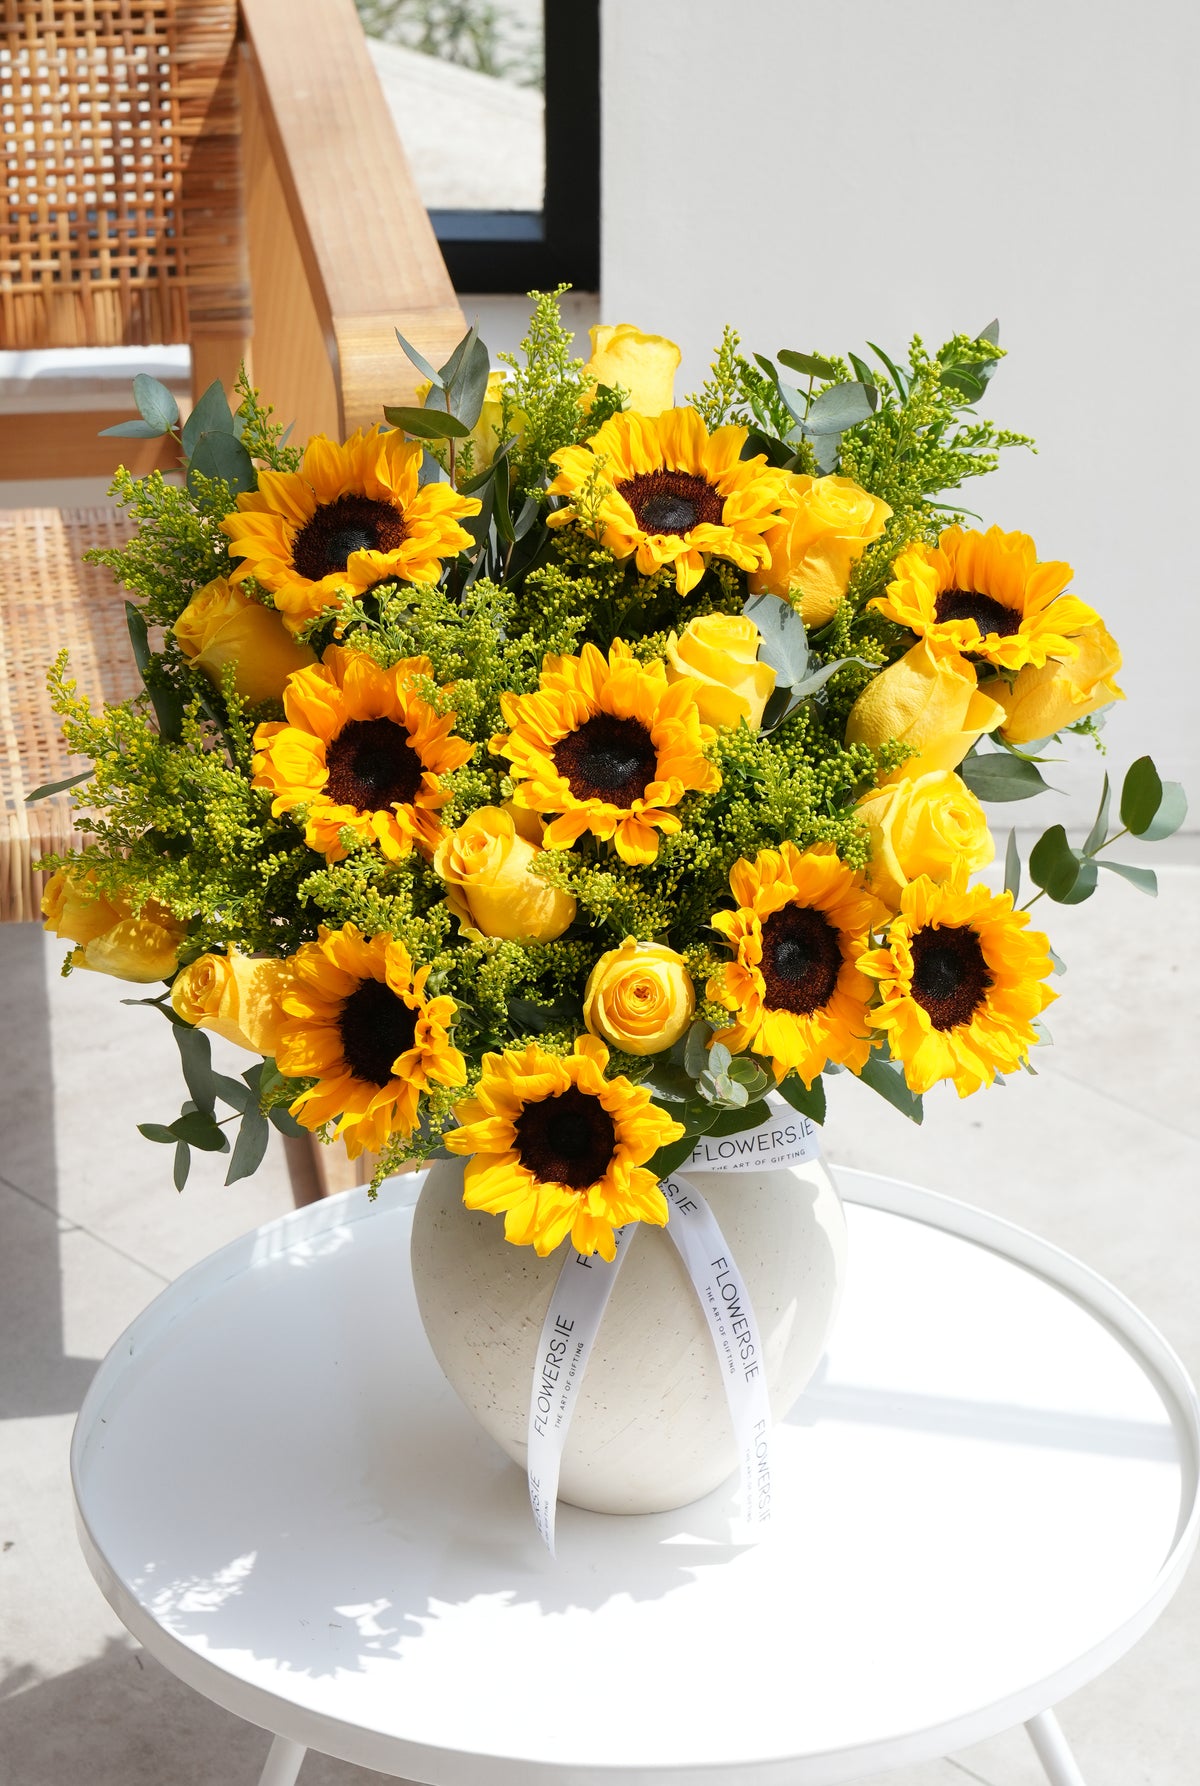 Wonderfully Sunflower in a Ceramic Vase